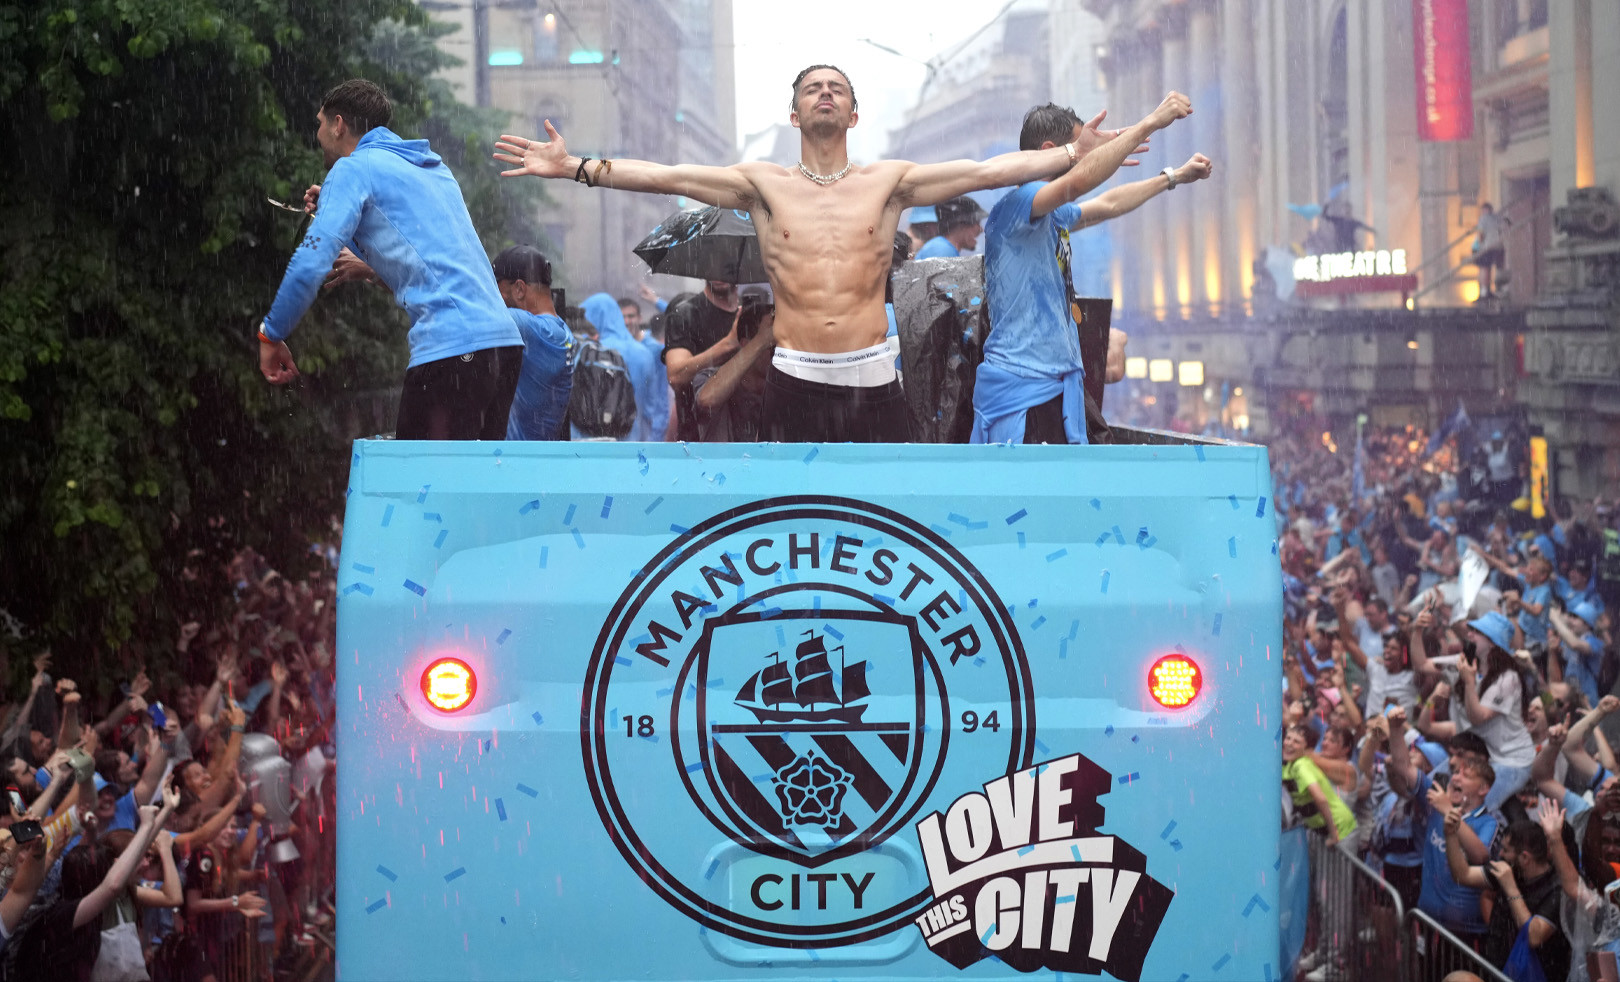 Jack Grealish on top of City's treble winning celebration bus